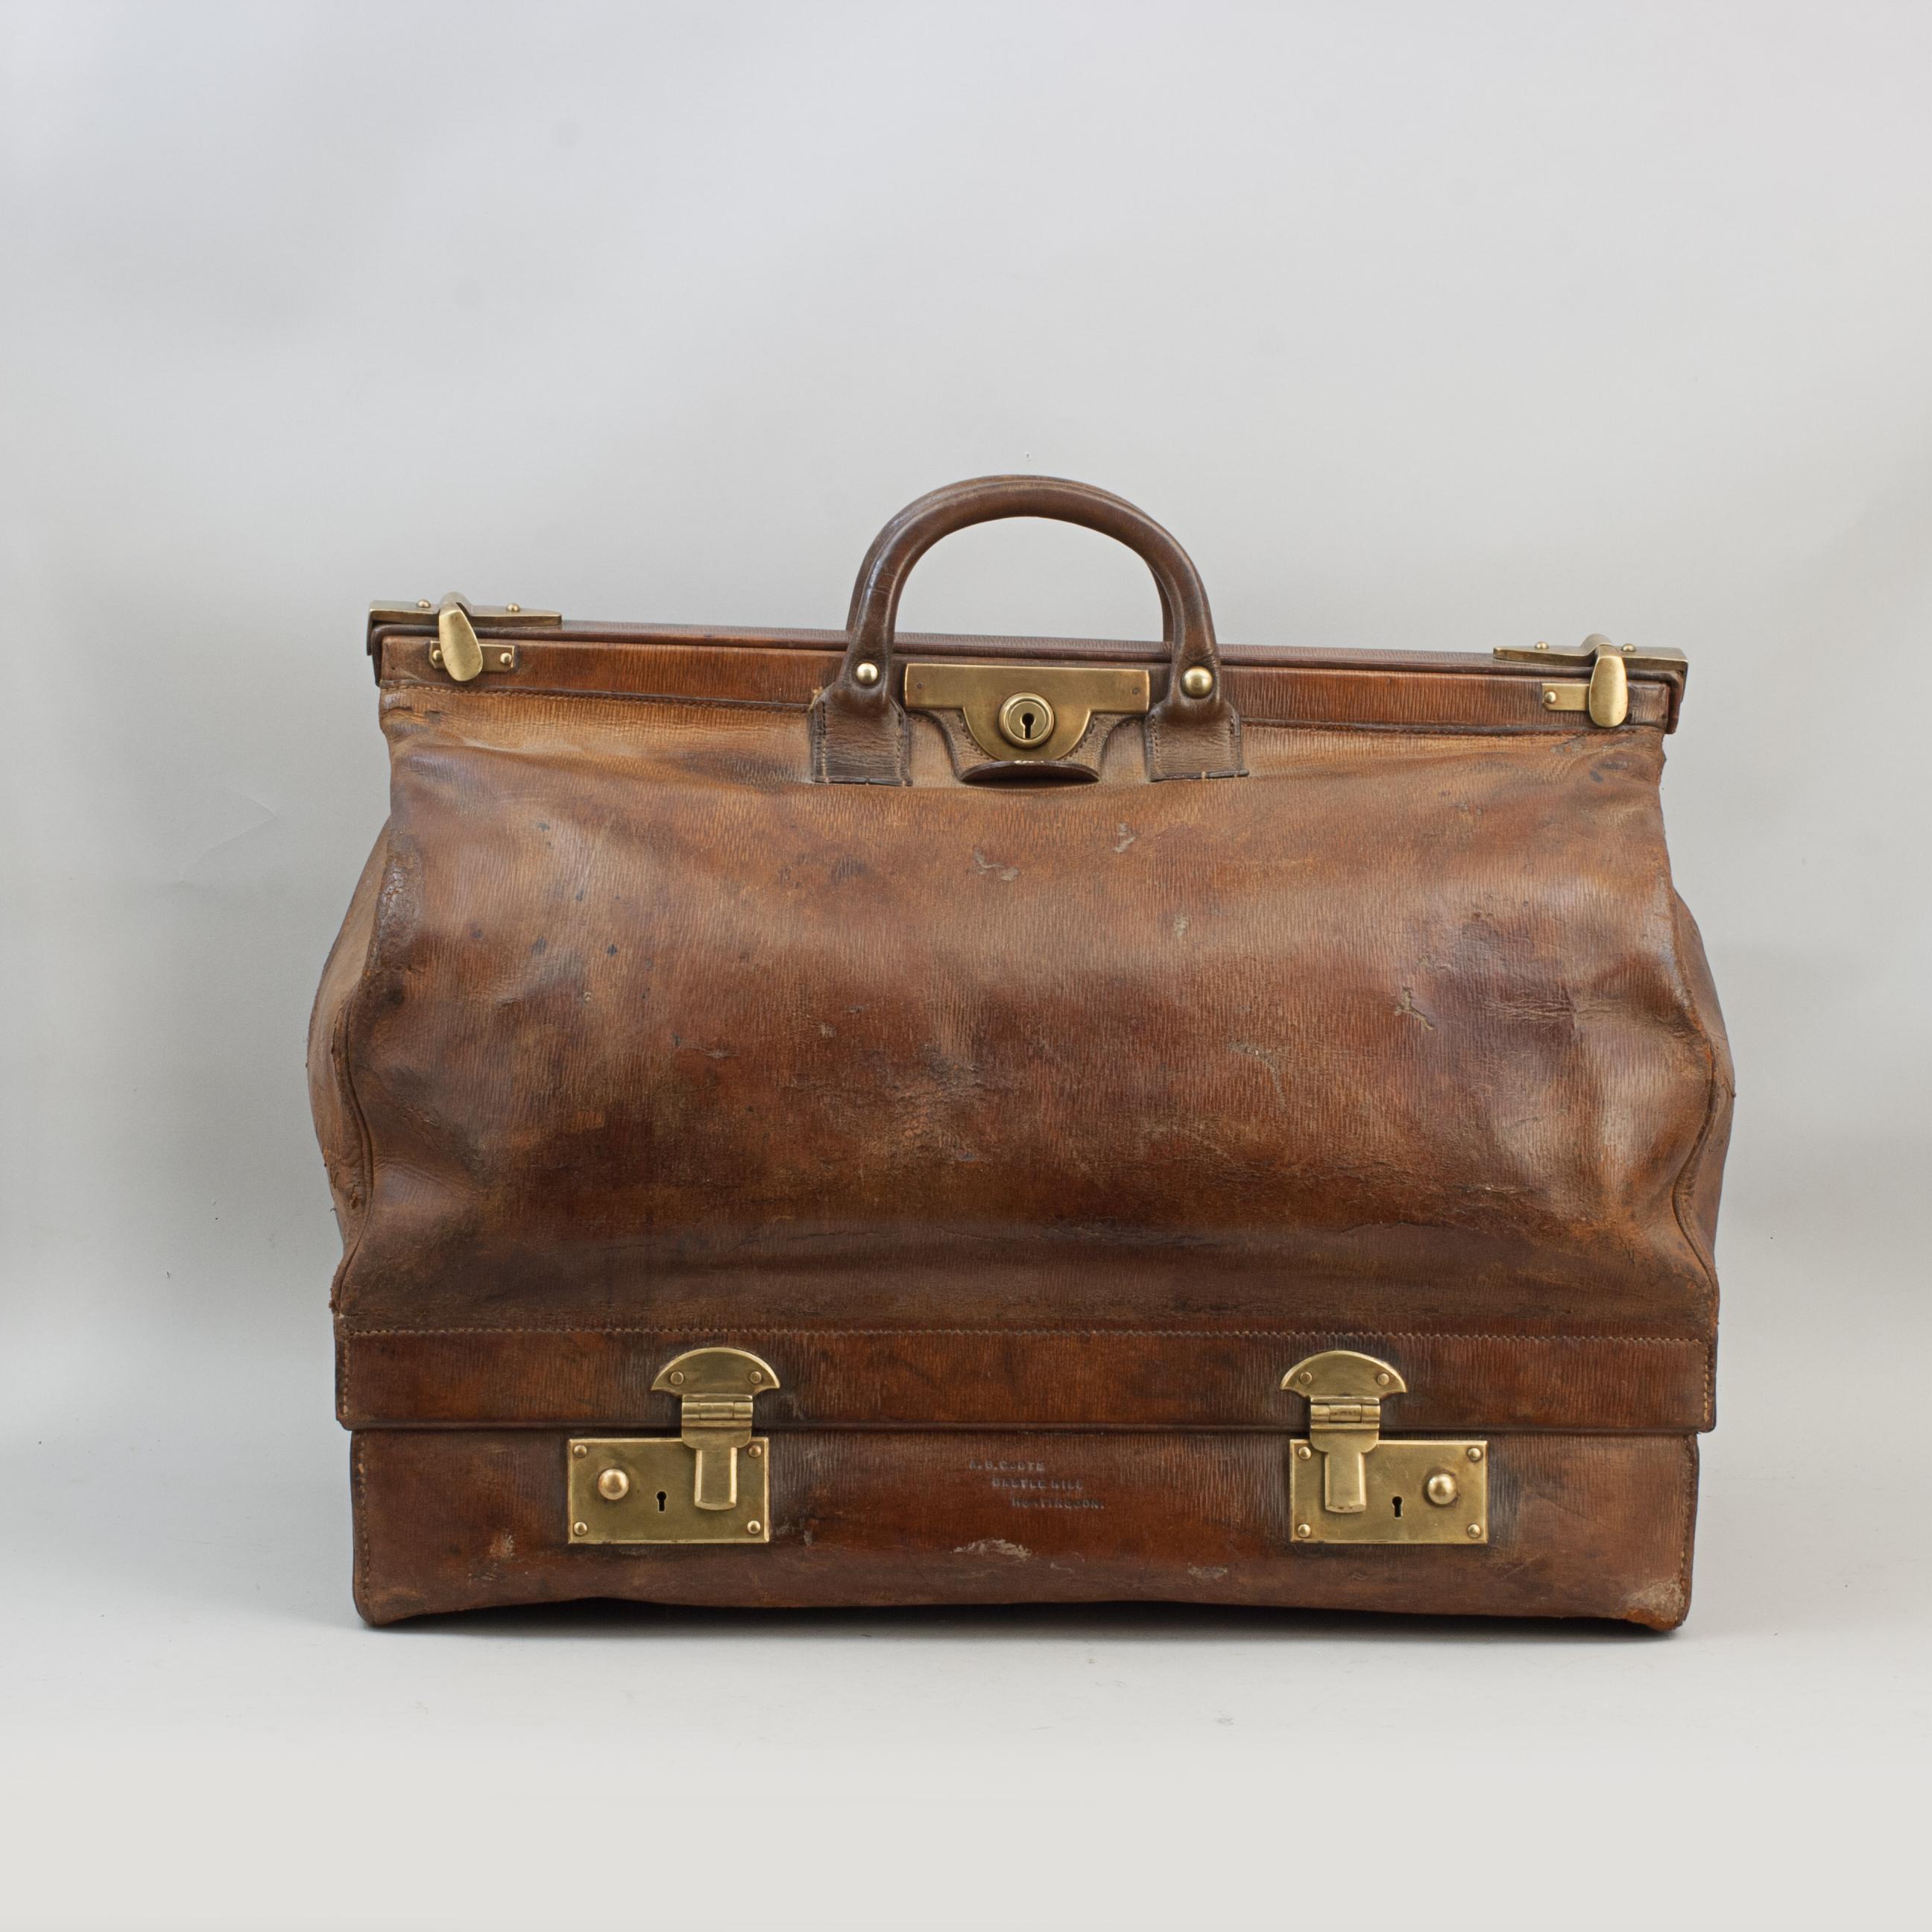 Leather Gladstone Bag - 6 For Sale on 1stDibs